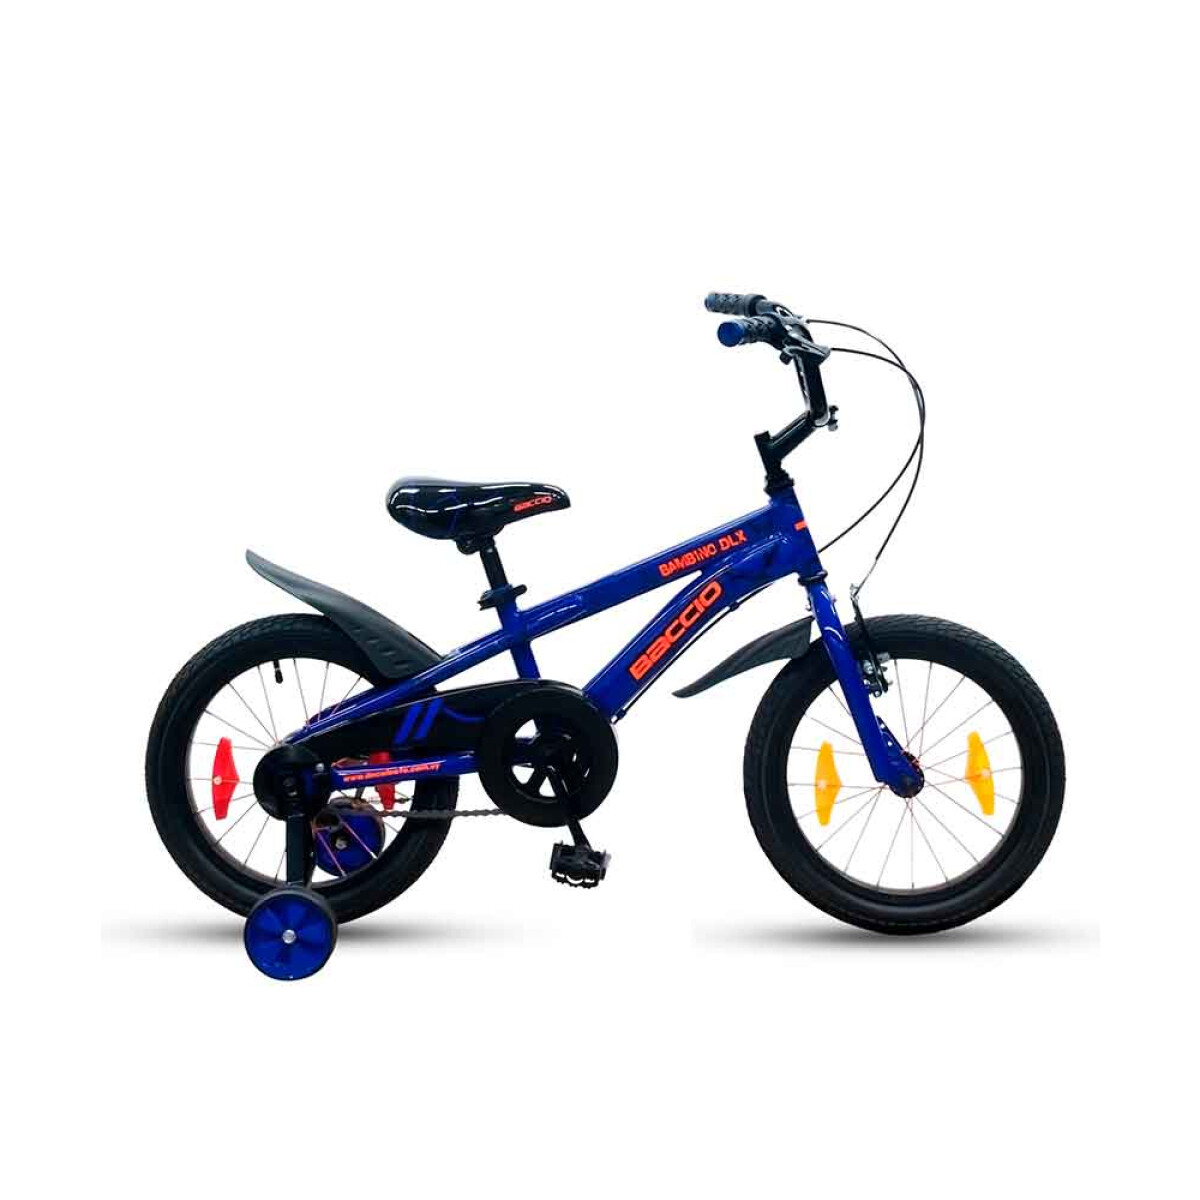 Bicicleta Baccio Bambino DLX 16 - Azul y Naranja 